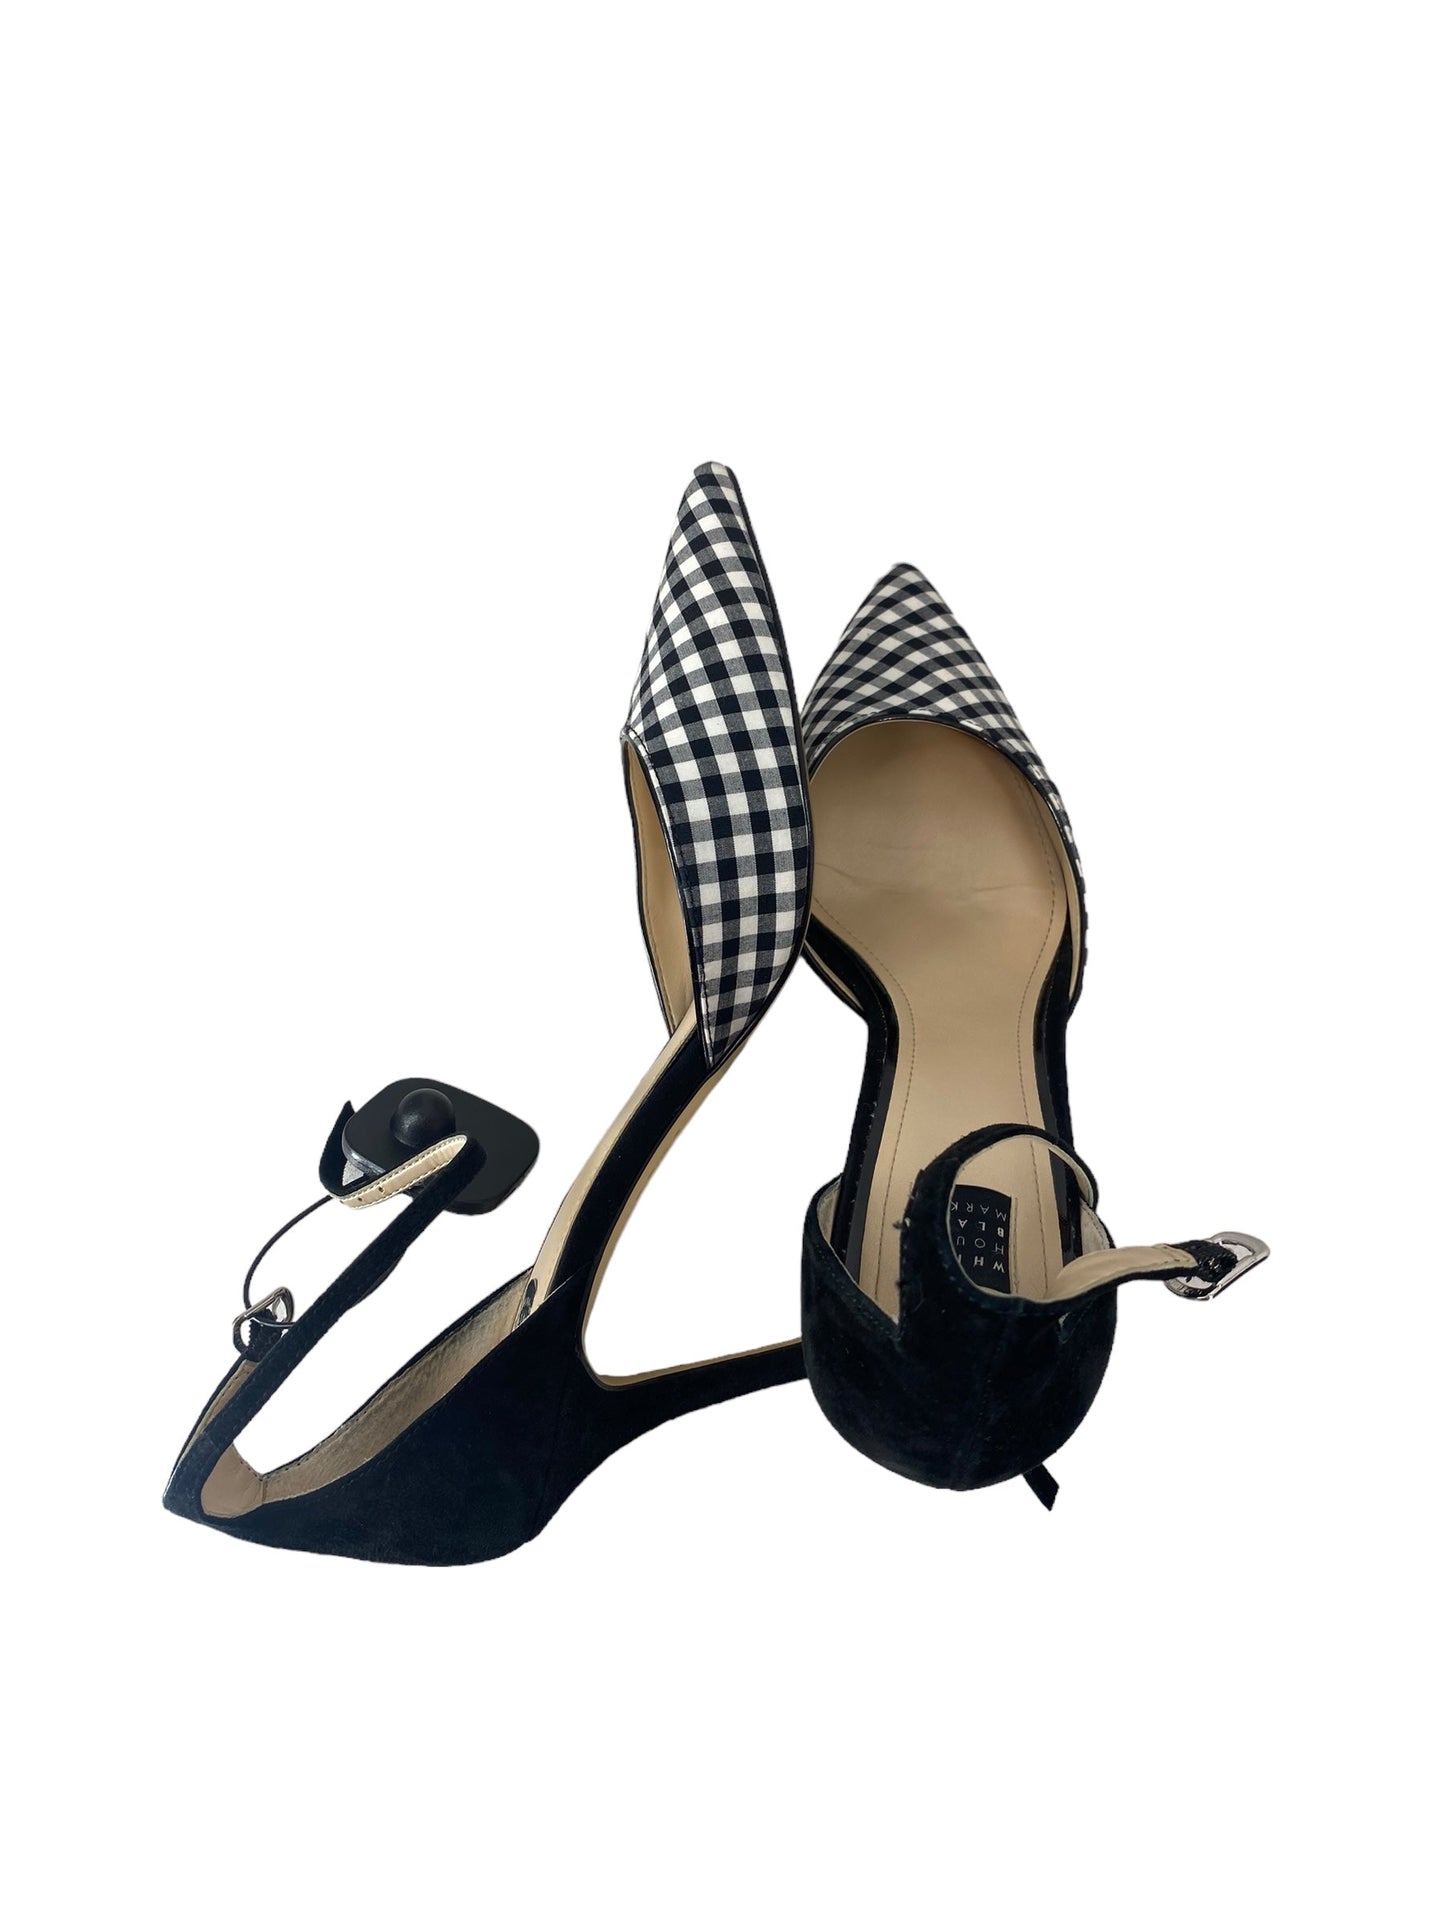 Black & White Shoes Heels Stiletto White House Black Market, Size 9